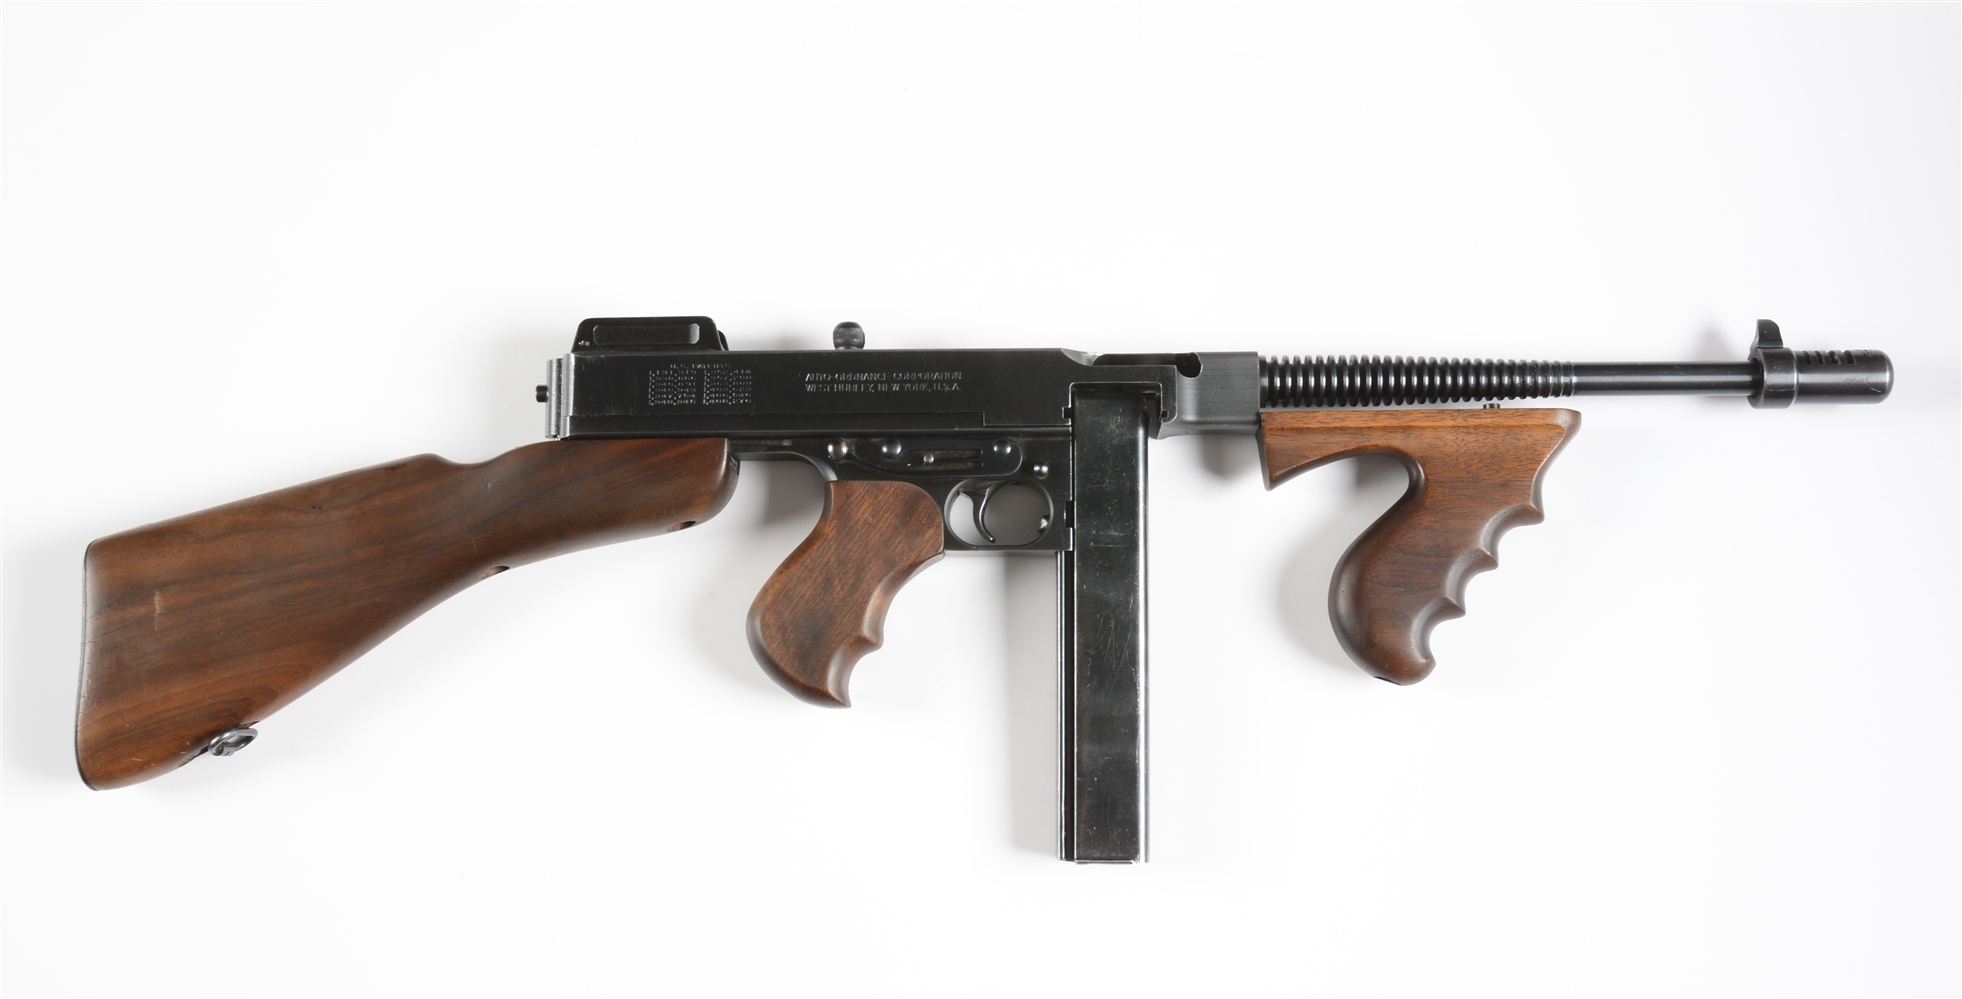 (N) EXTREMELY FINE AUTO ORDNANCE THOMPSON 1928 WEST HURLEY MACHINE GUN (CURIO & RELIC)